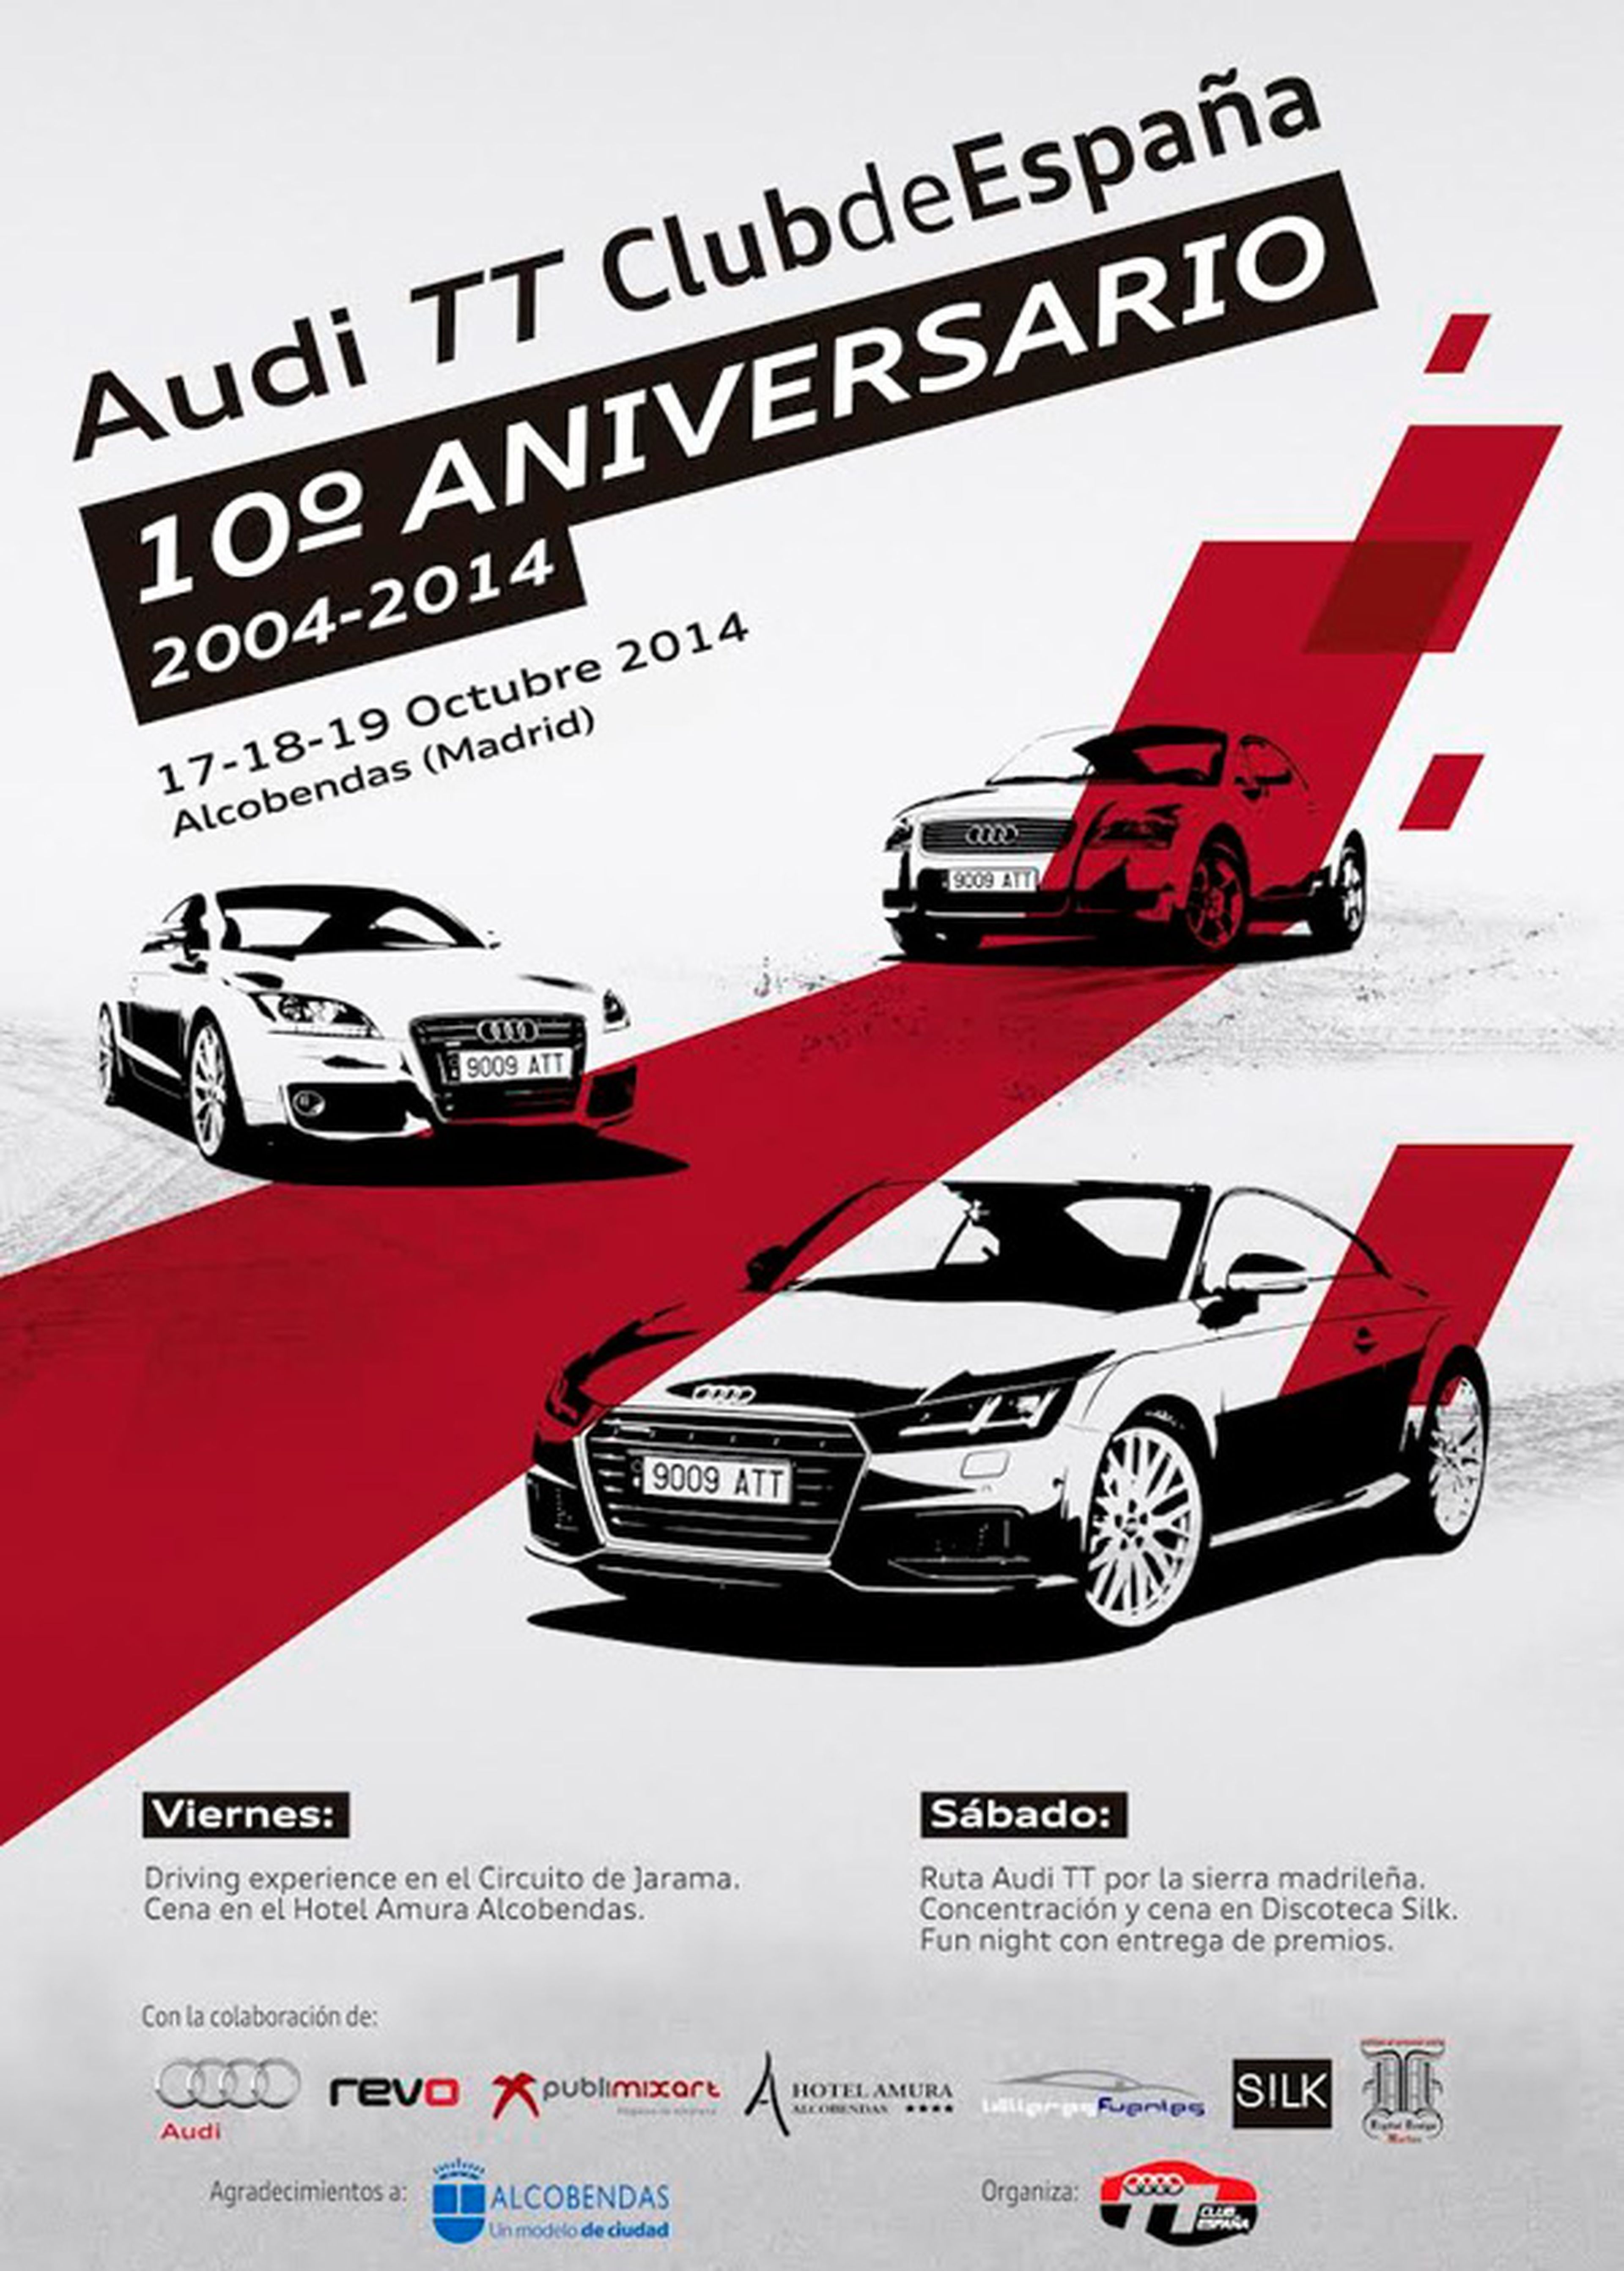 100 Audi TT se juntarán en Madrid el próximo fin de semana